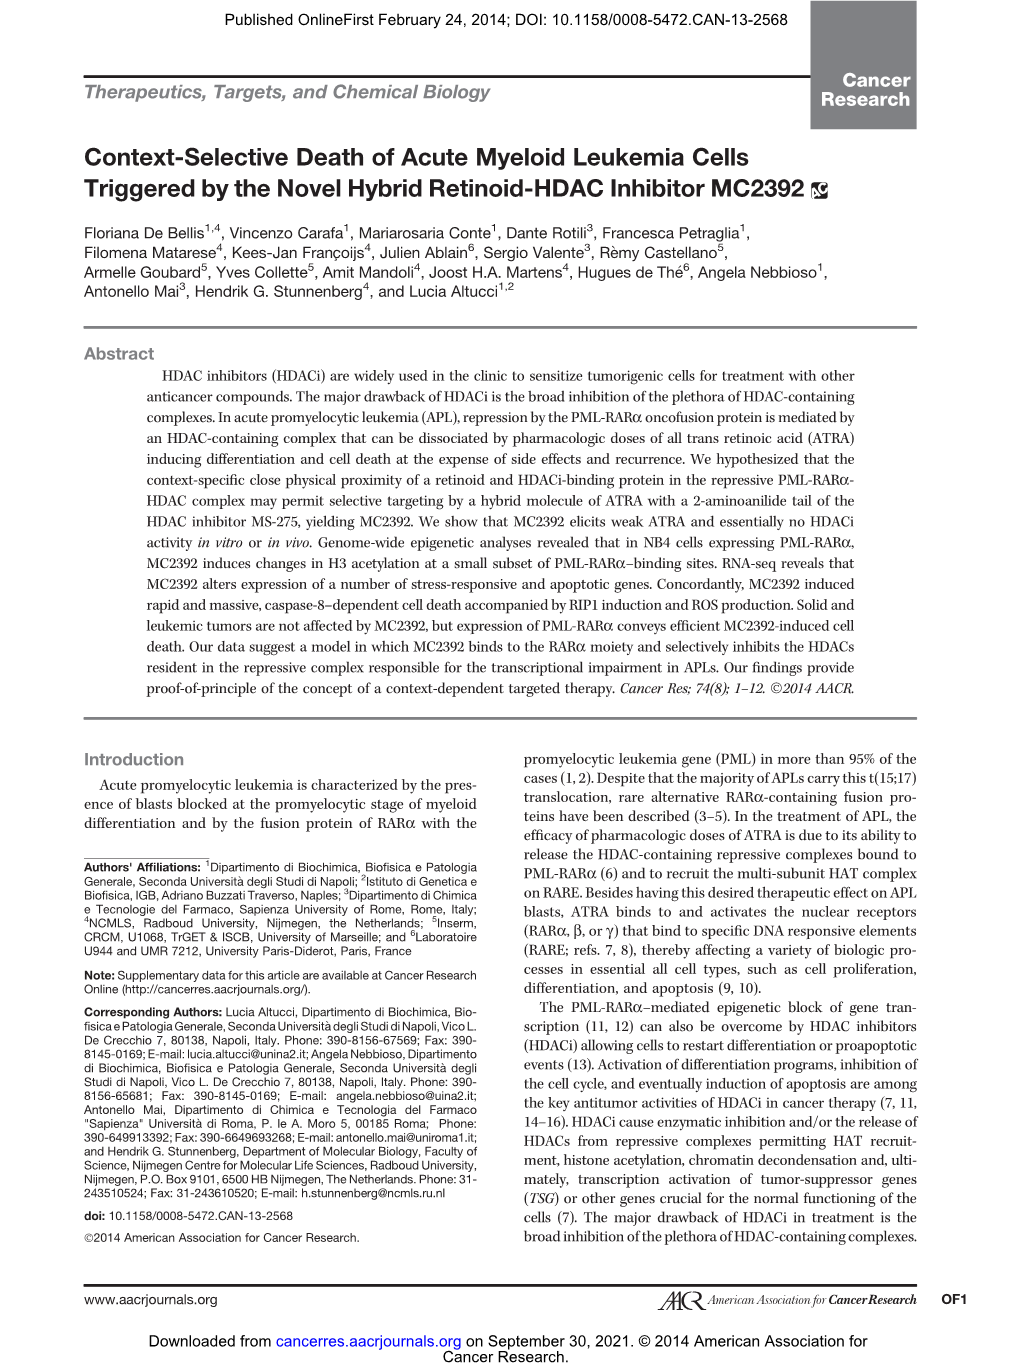 Context-Selective Death of Acute Myeloid Leukemia Cells Triggered by the Novel Hybrid Retinoid-HDAC Inhibitor MC2392